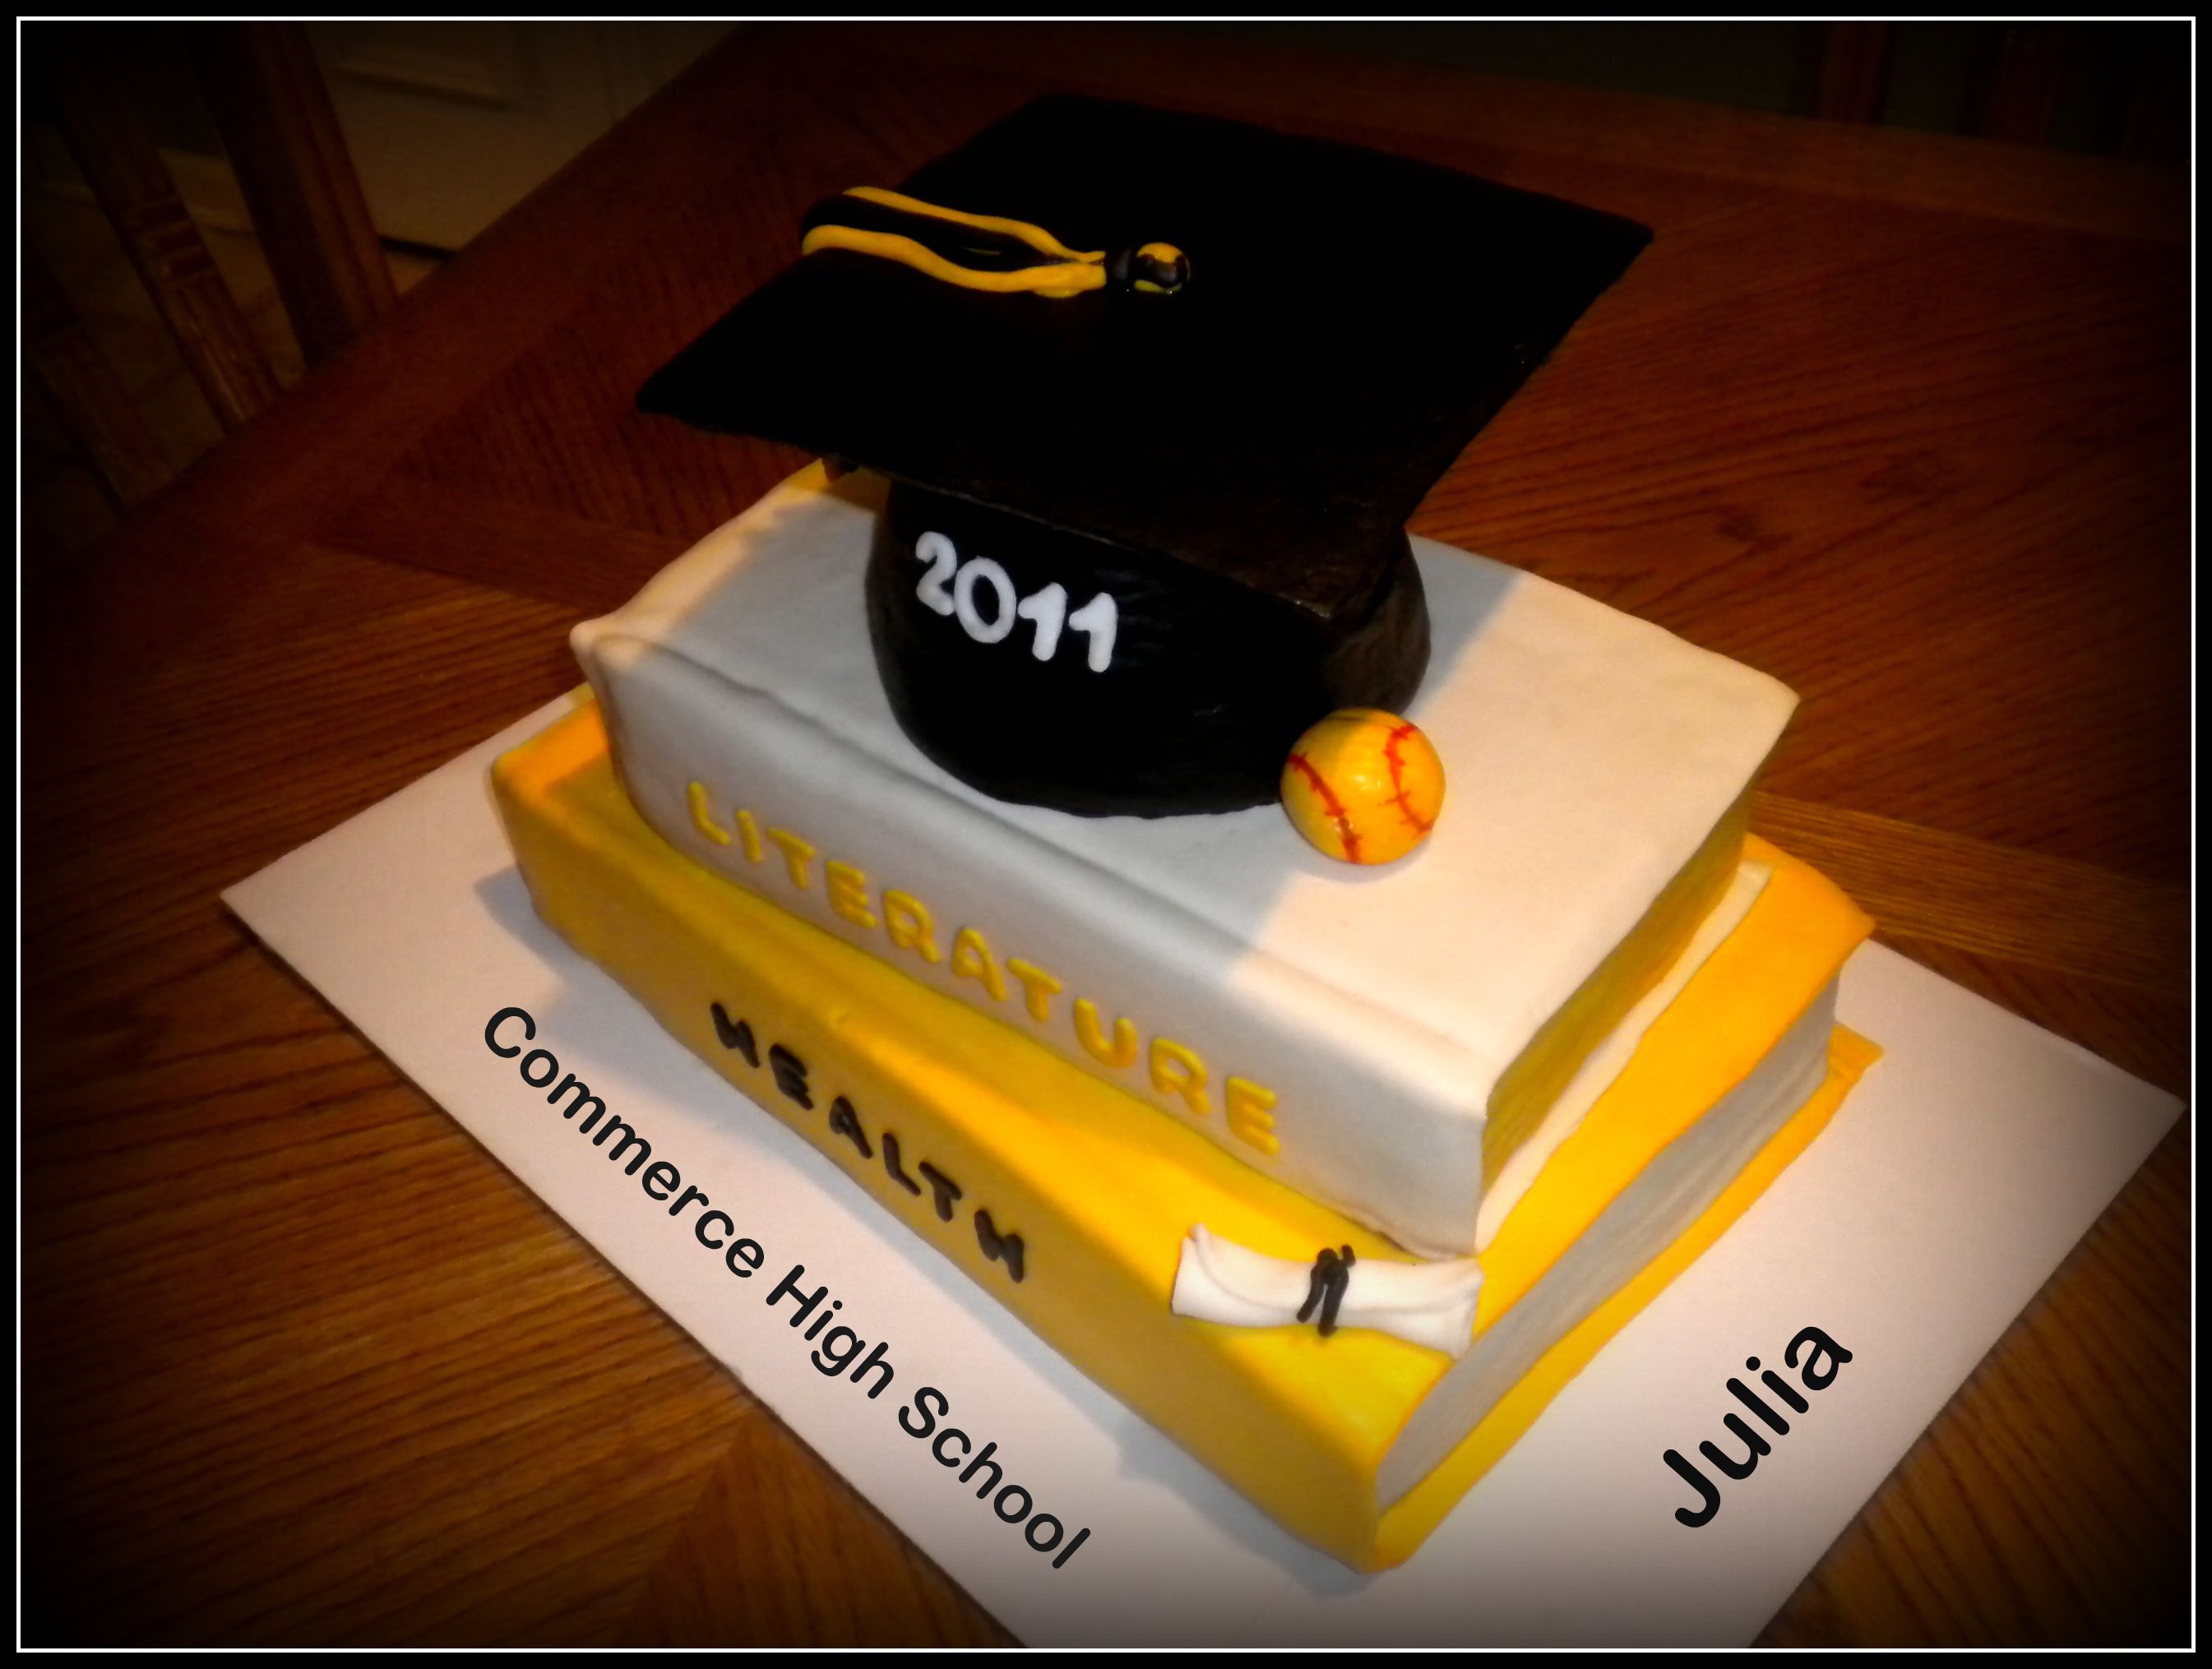 High School Graduation Cake Ideas